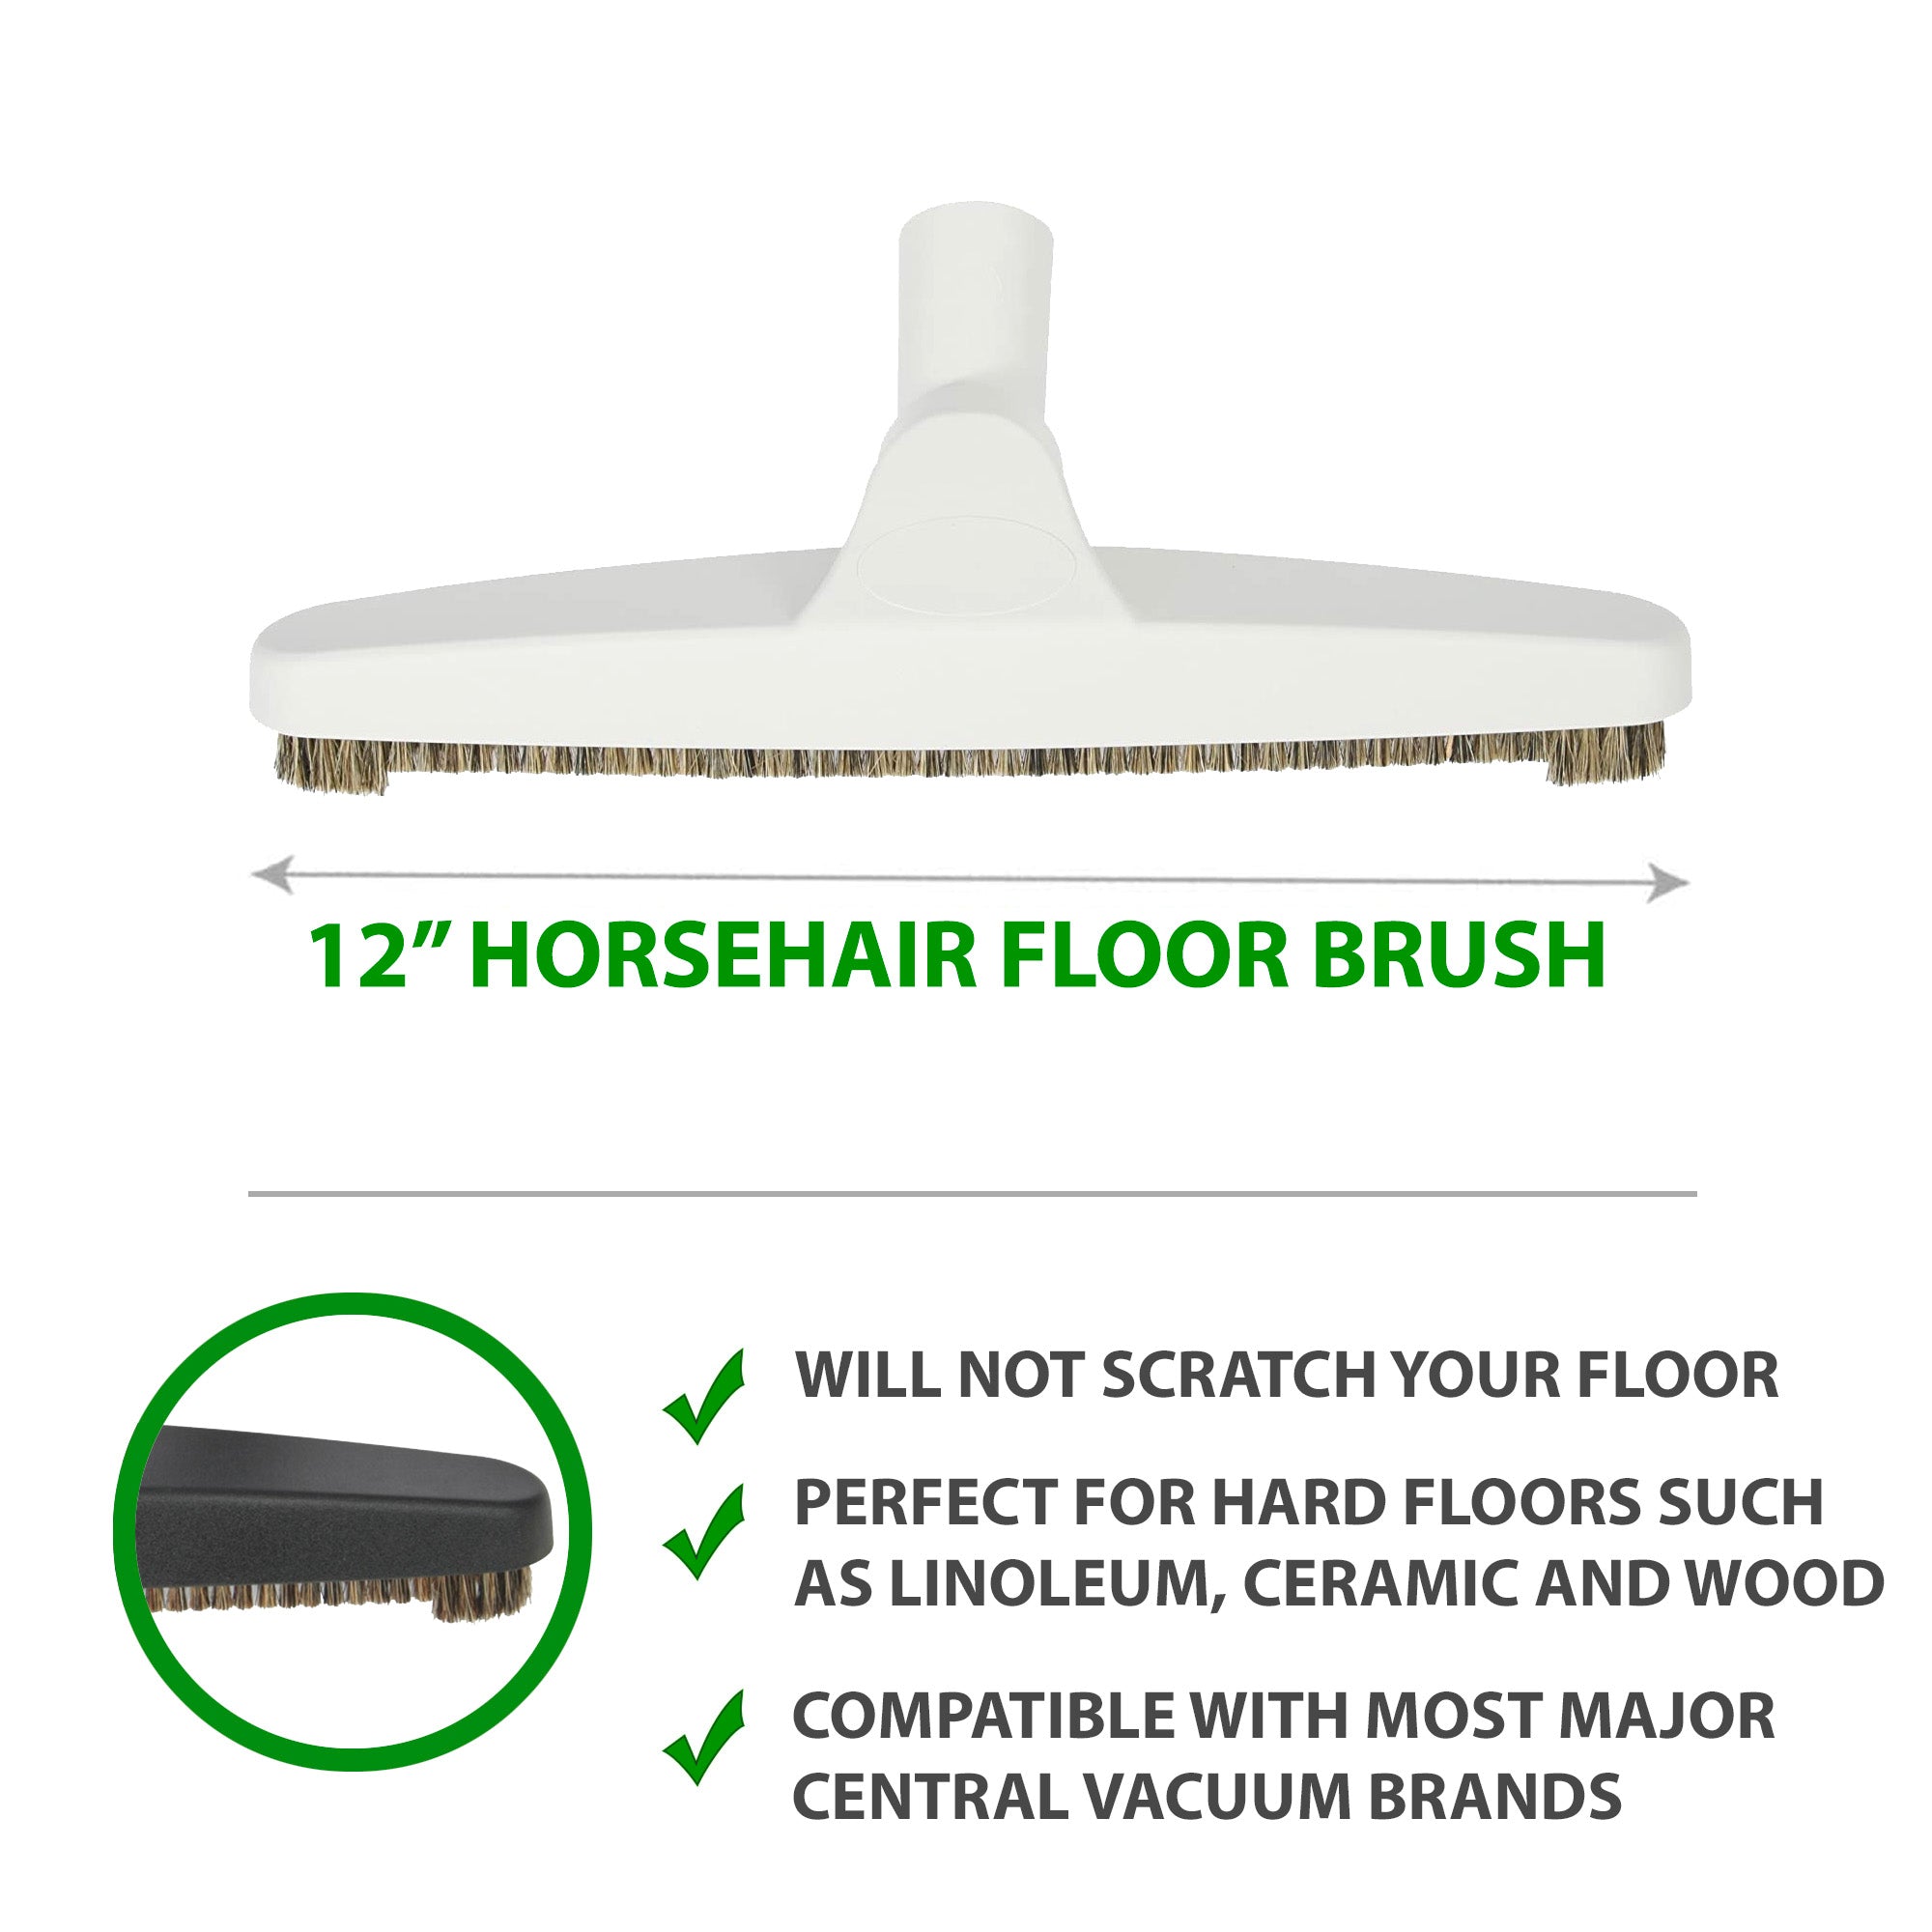 12" Horsehair Floor Brush